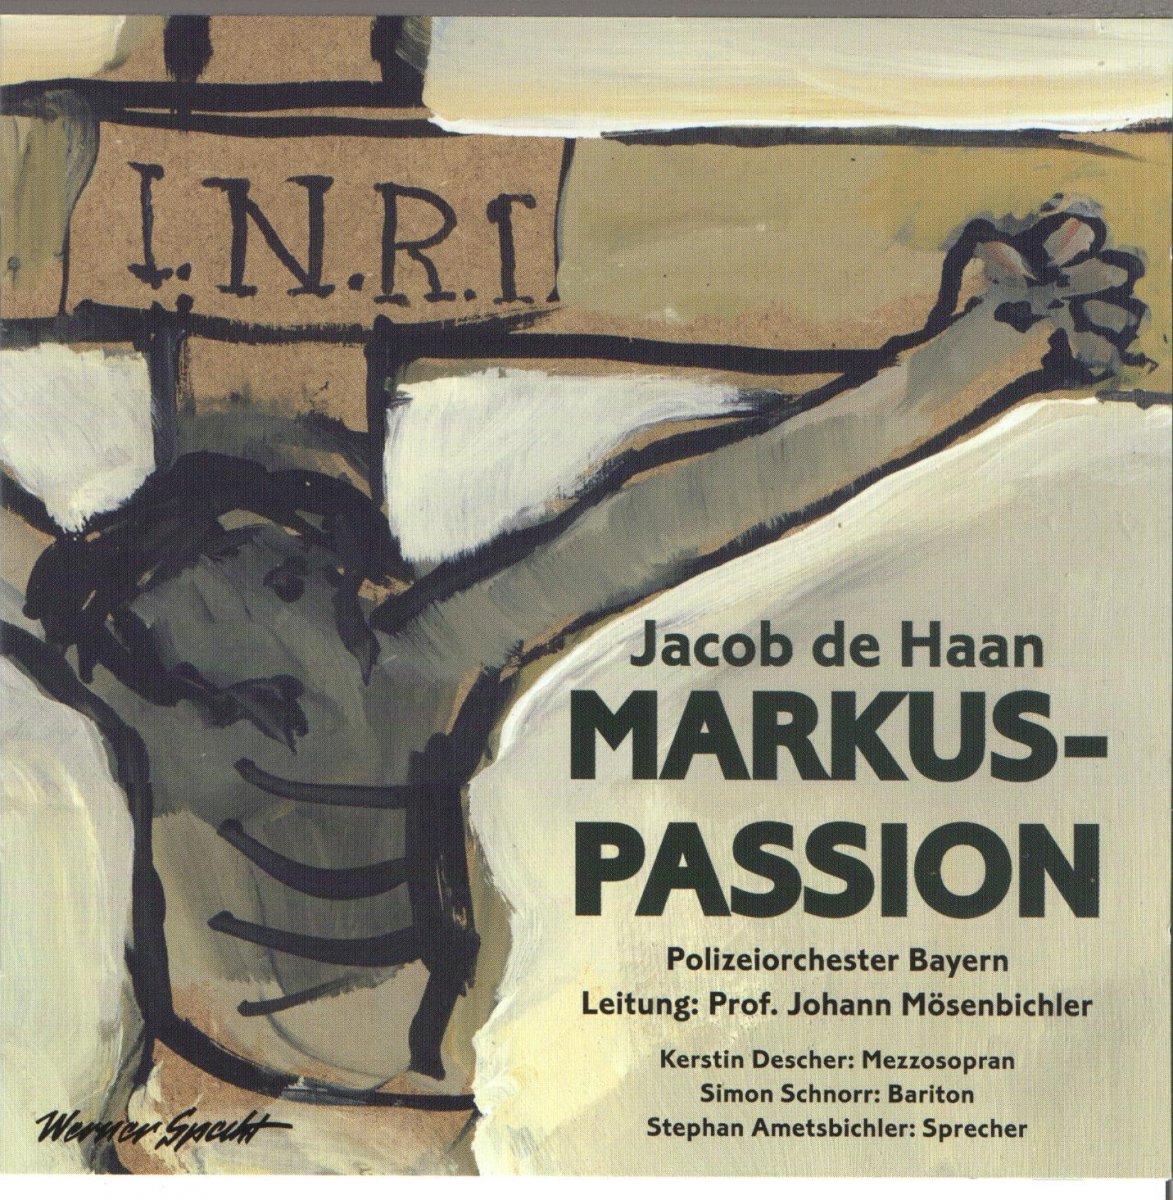 Markus-Passion - click here